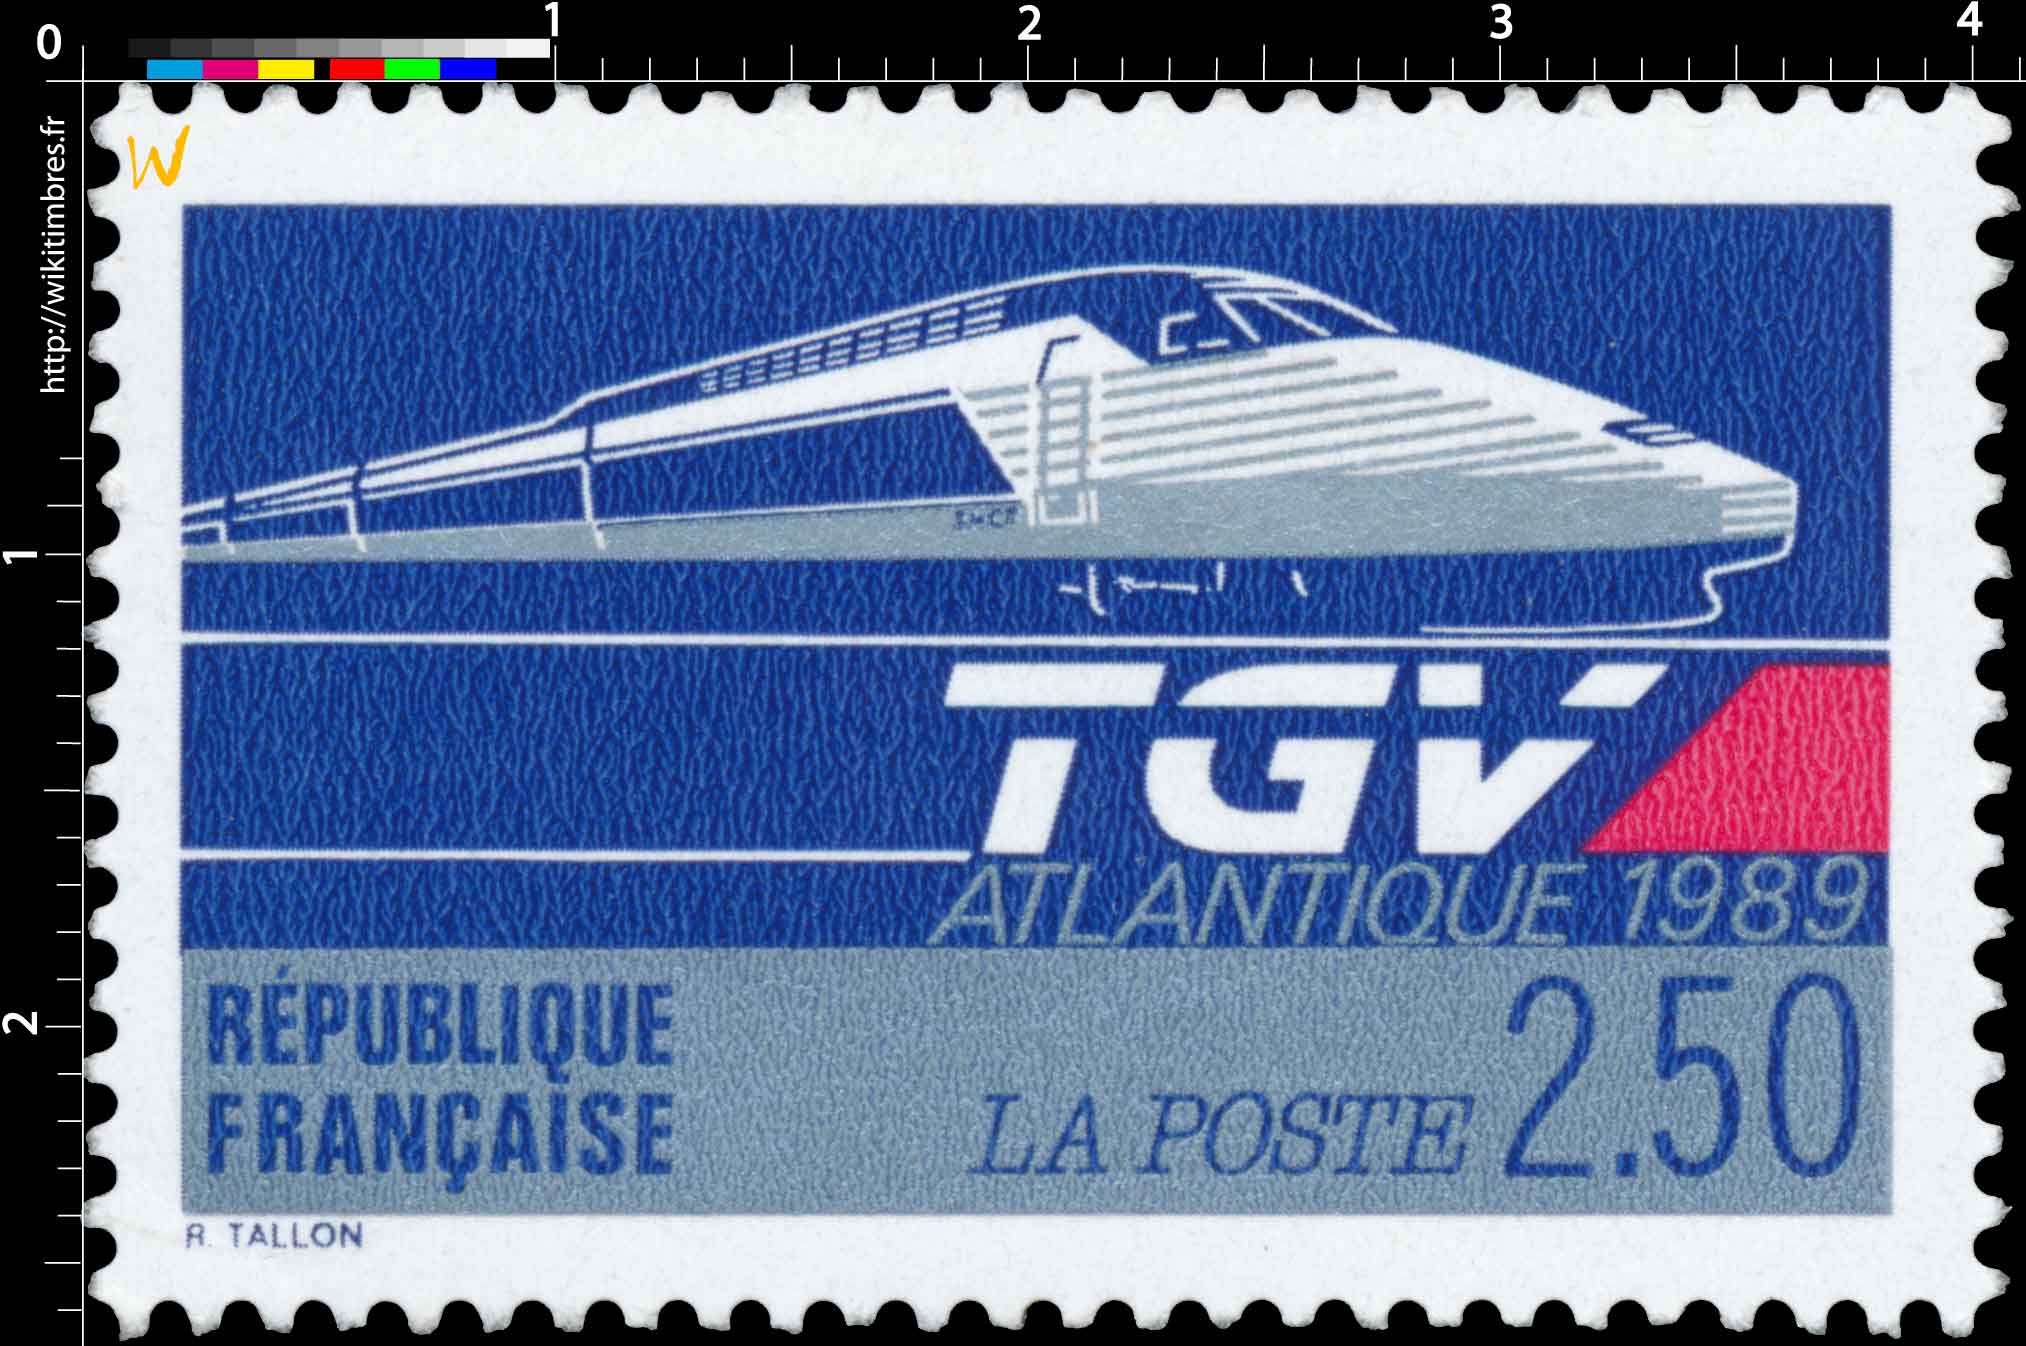 TGV ATLANTIQUE 1989